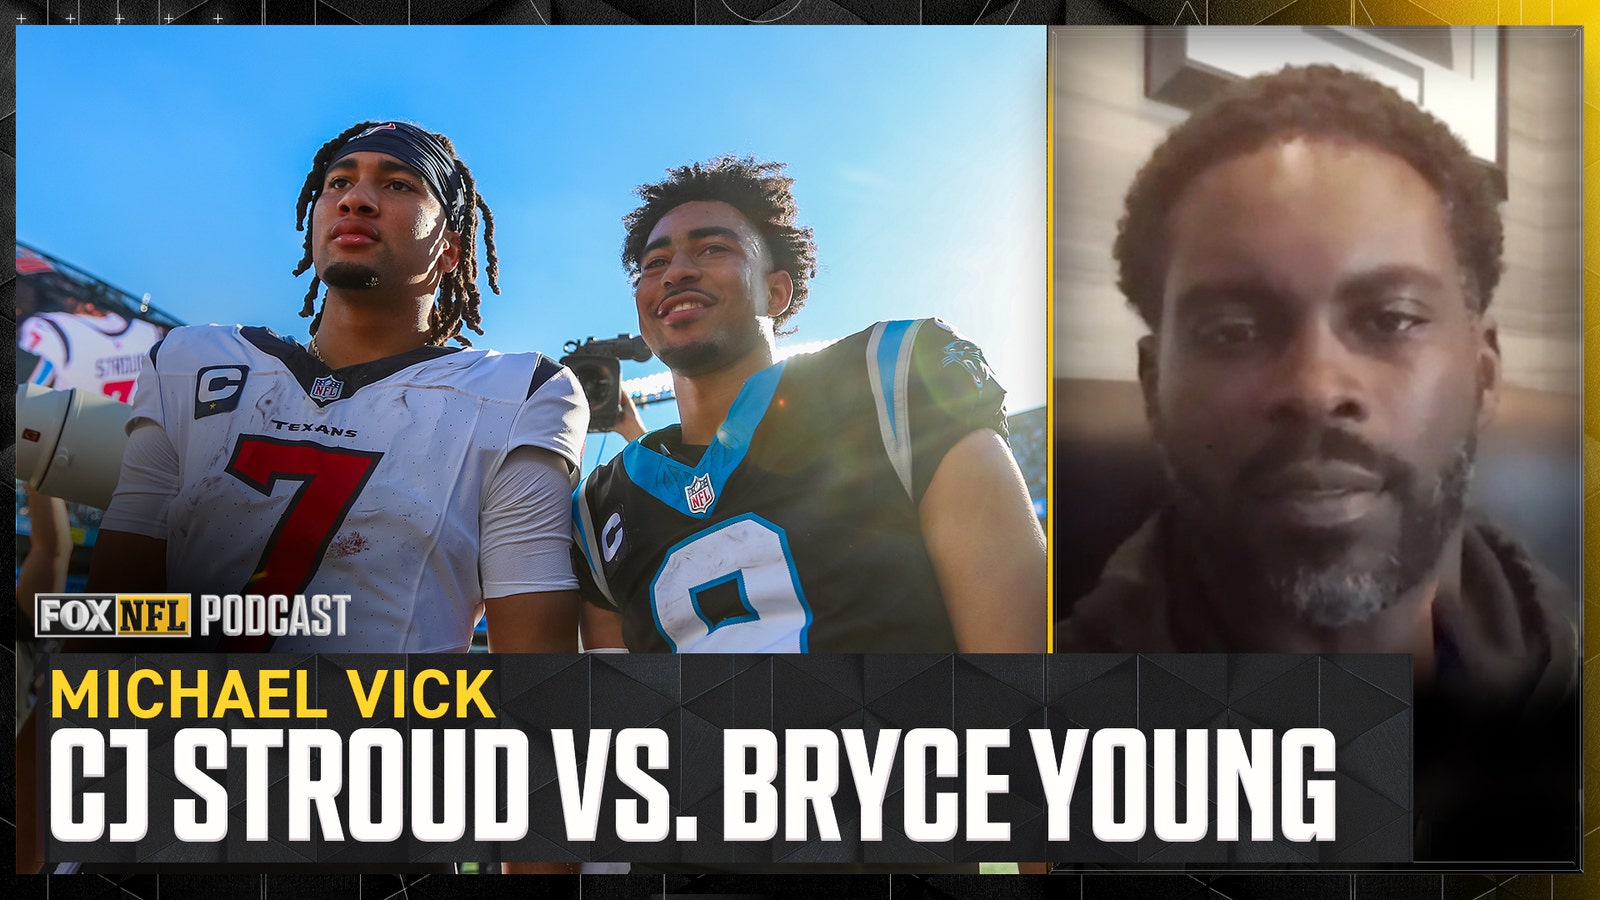 Michael Vick breaks down the C.J. Stroud vs. Bryce Young debate